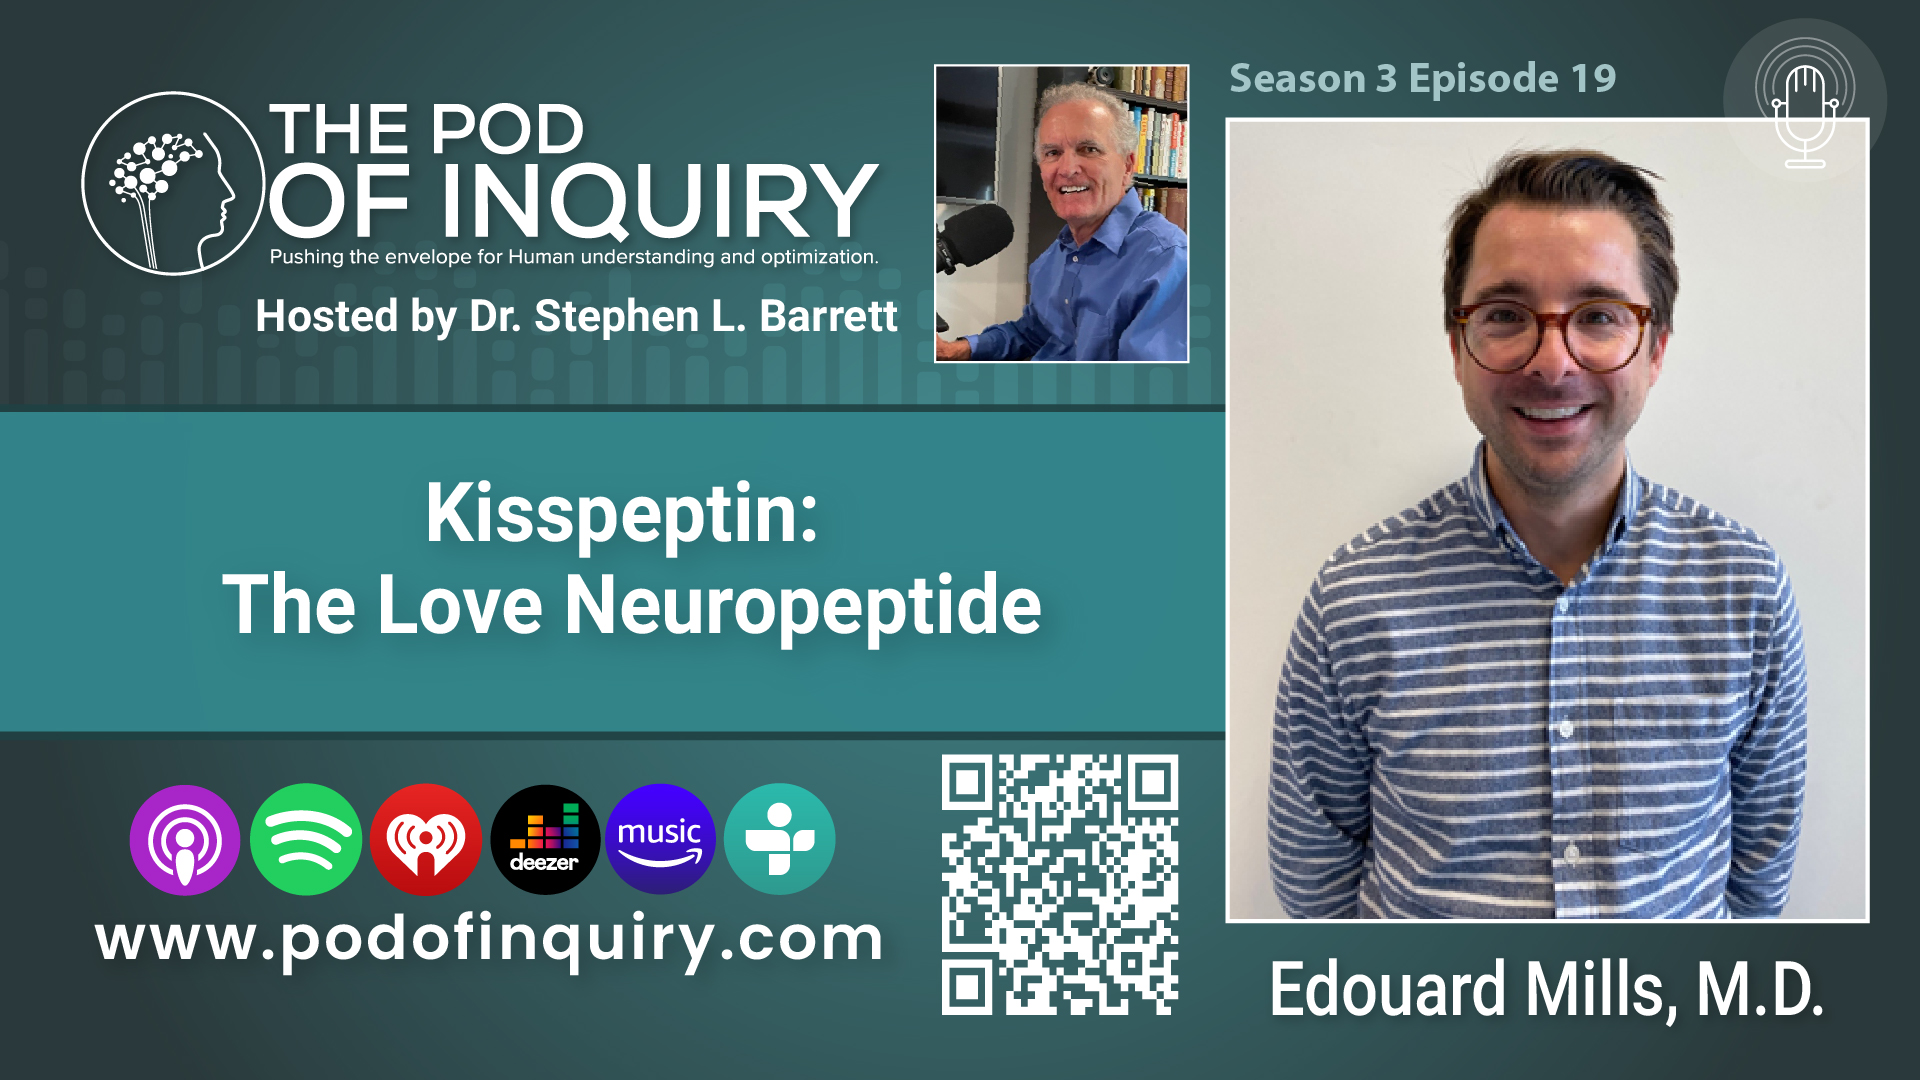 Kisspeptin: The Love Neuropeptide